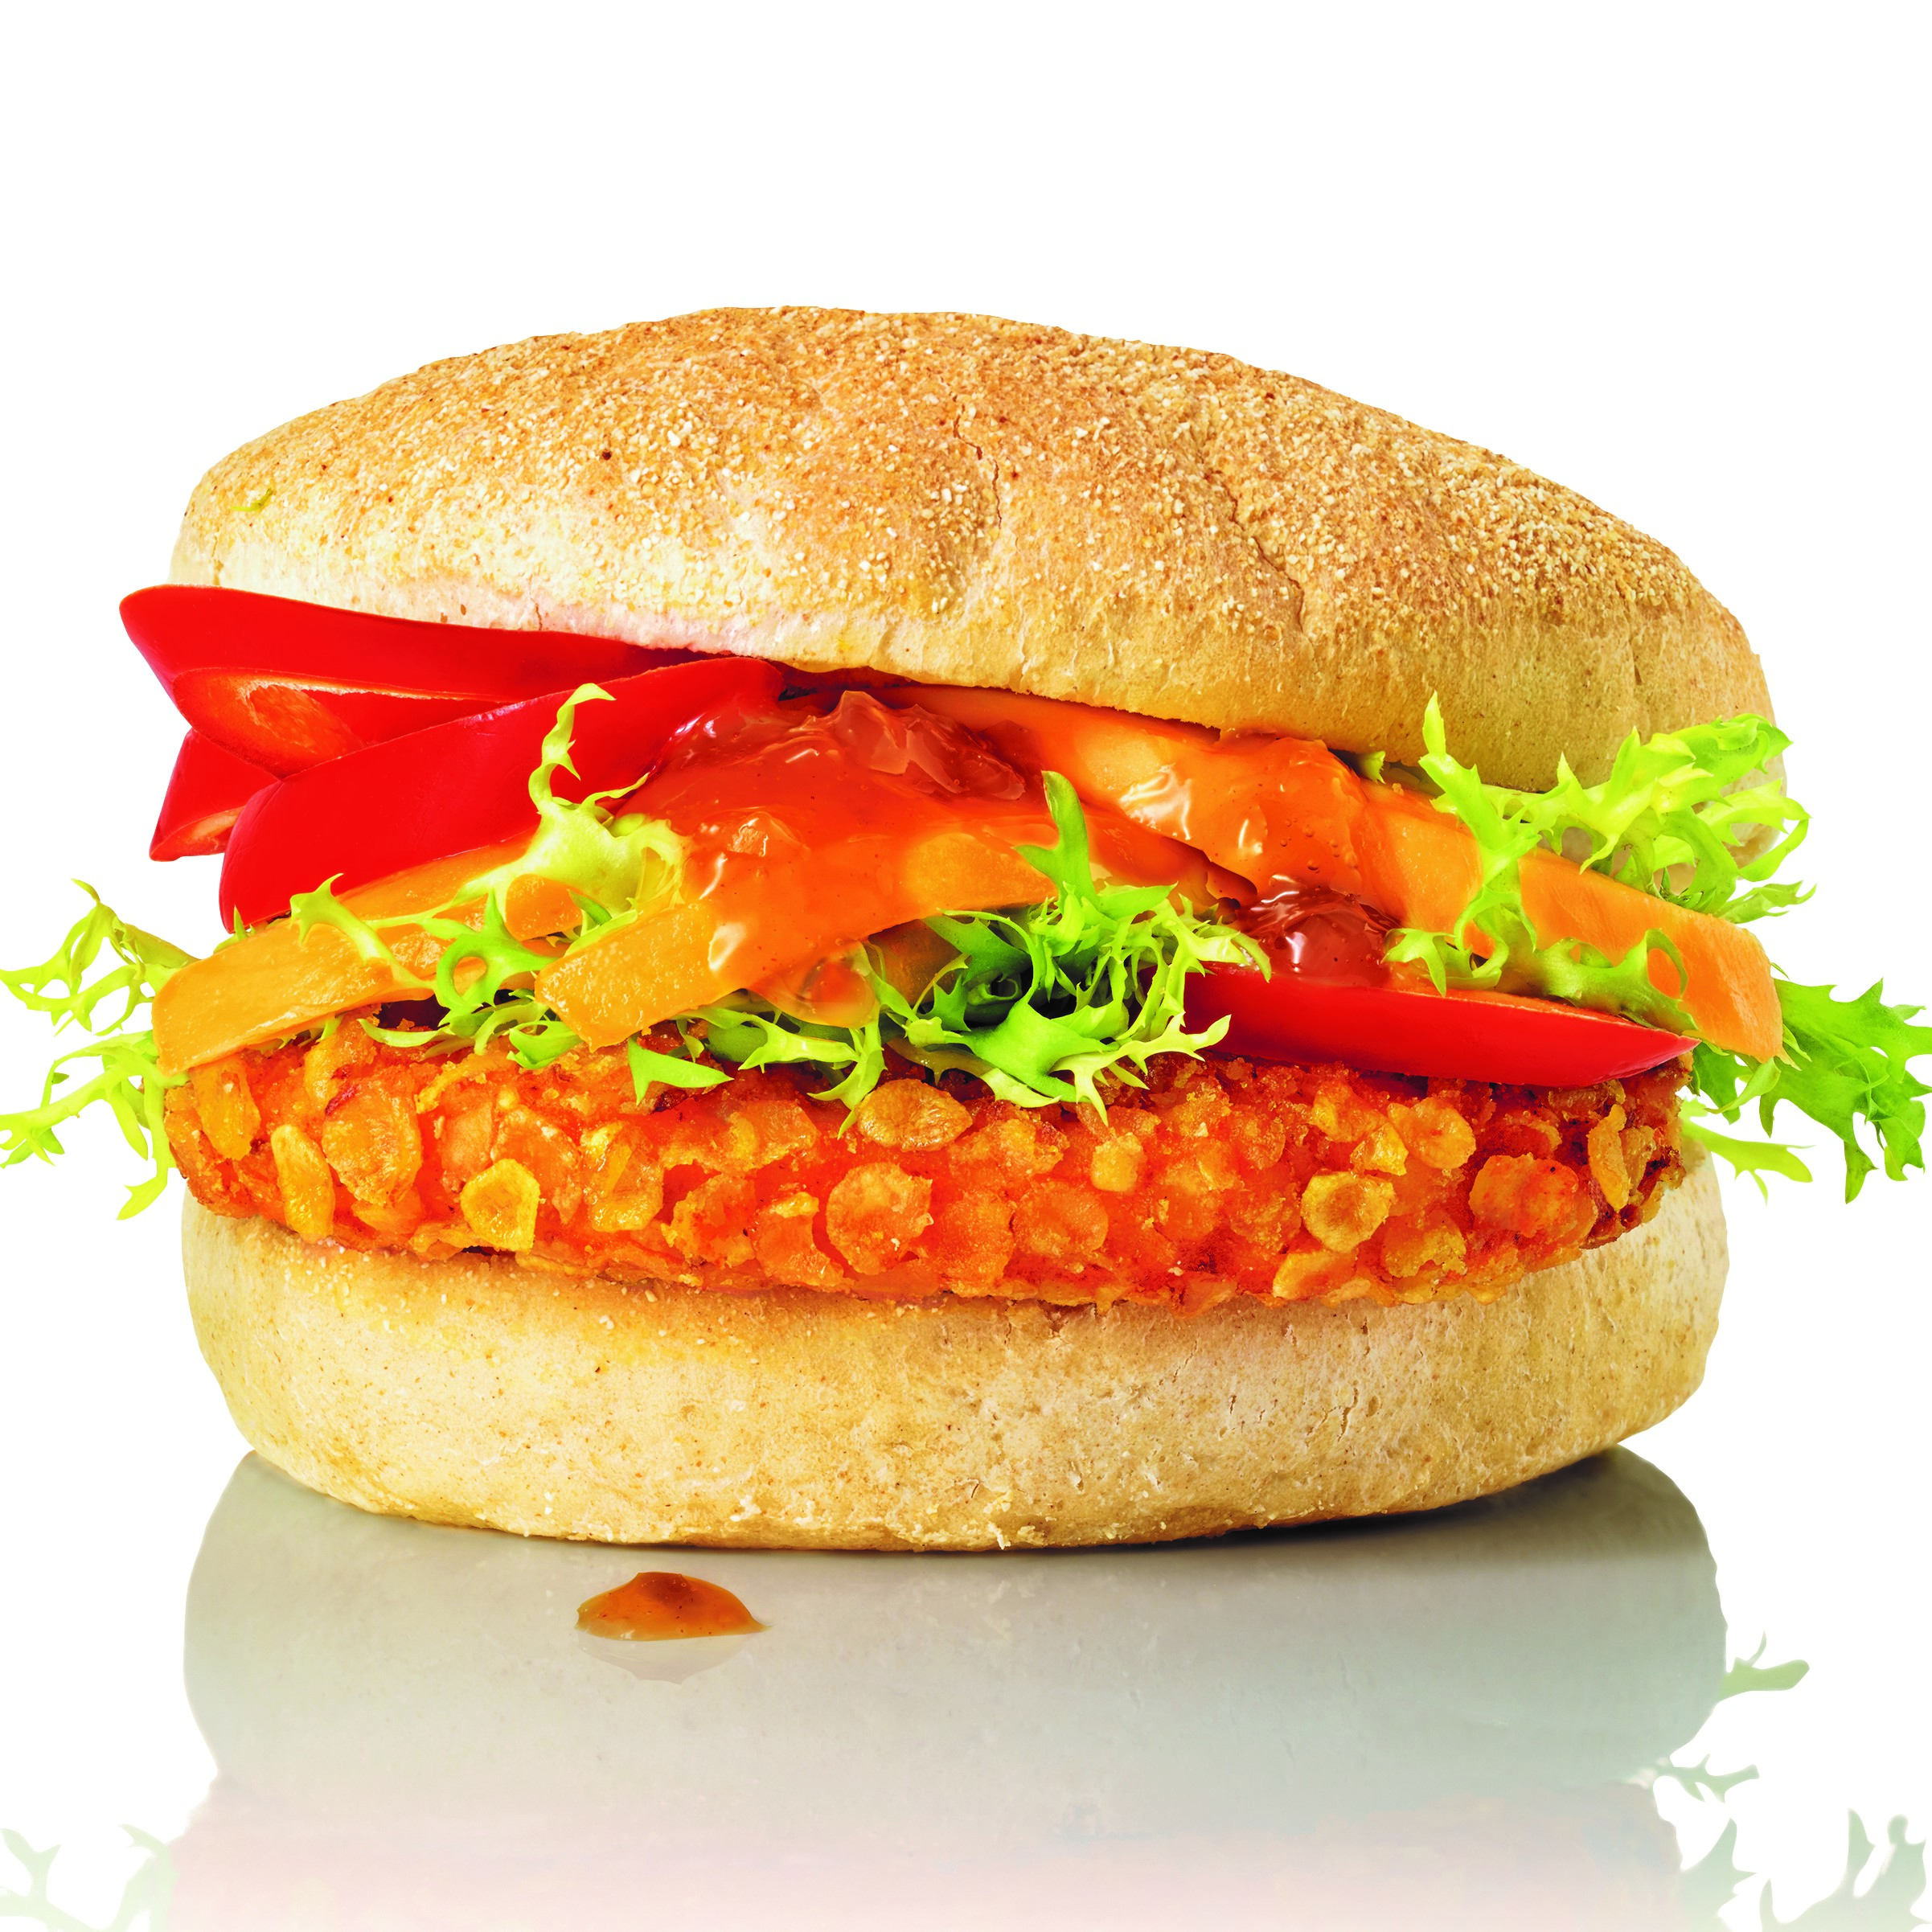       Hamburguesa de Pollo Crunchy Chick'n Burger - 135 gr. - 10*12 mm